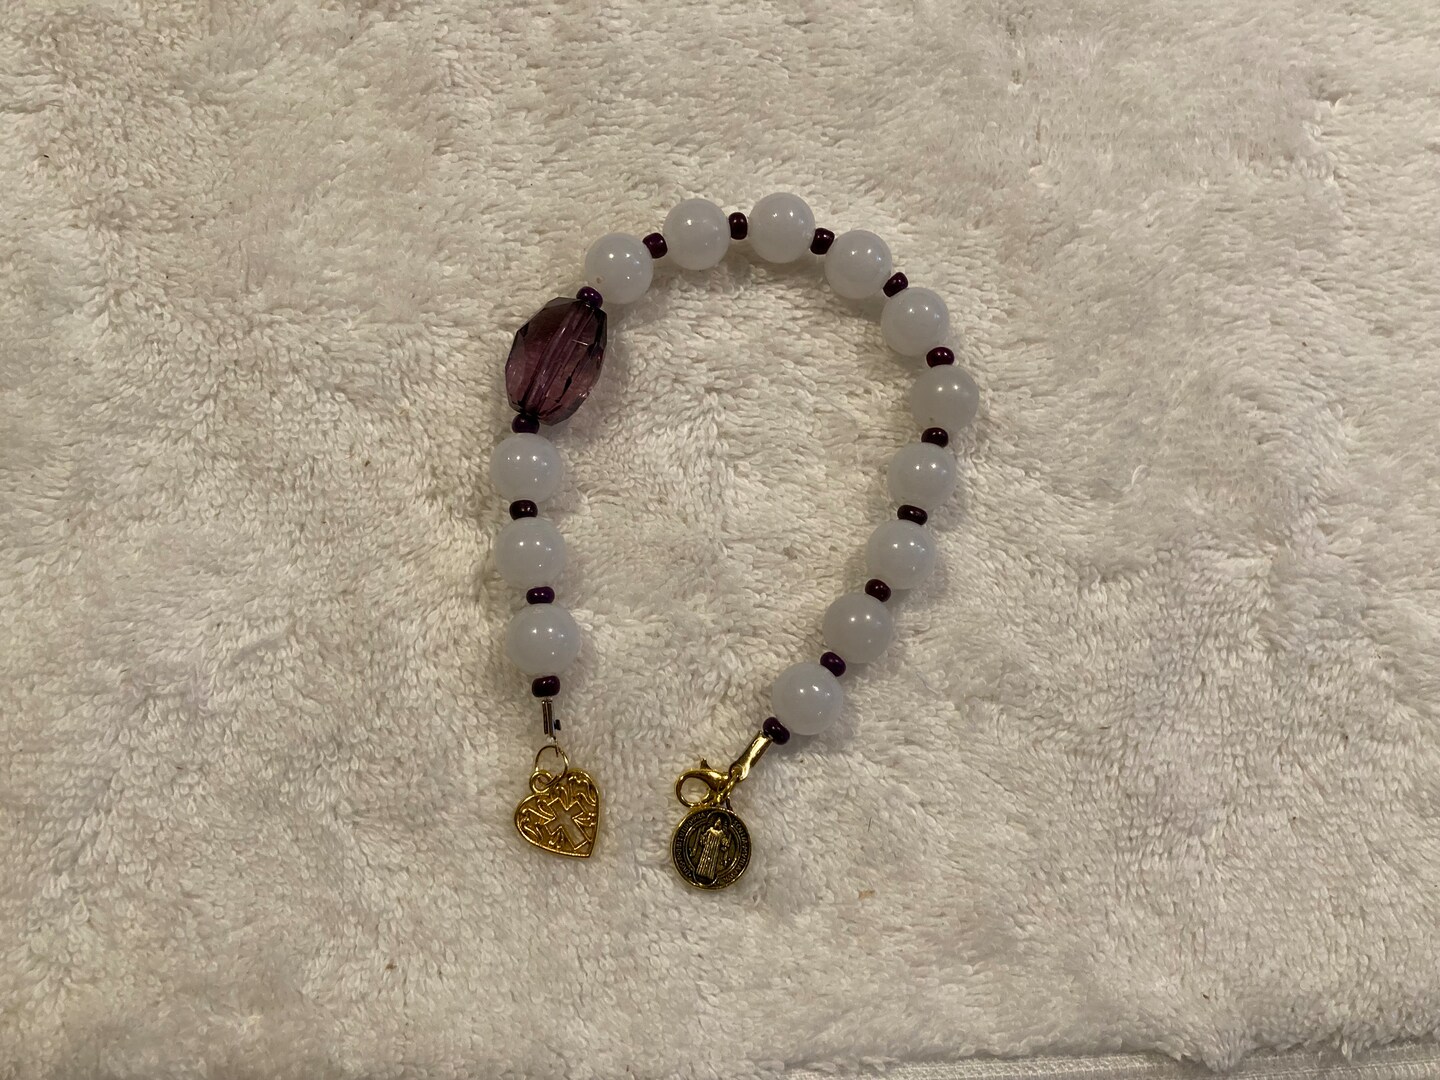 Heart Beads Jewelry : Home